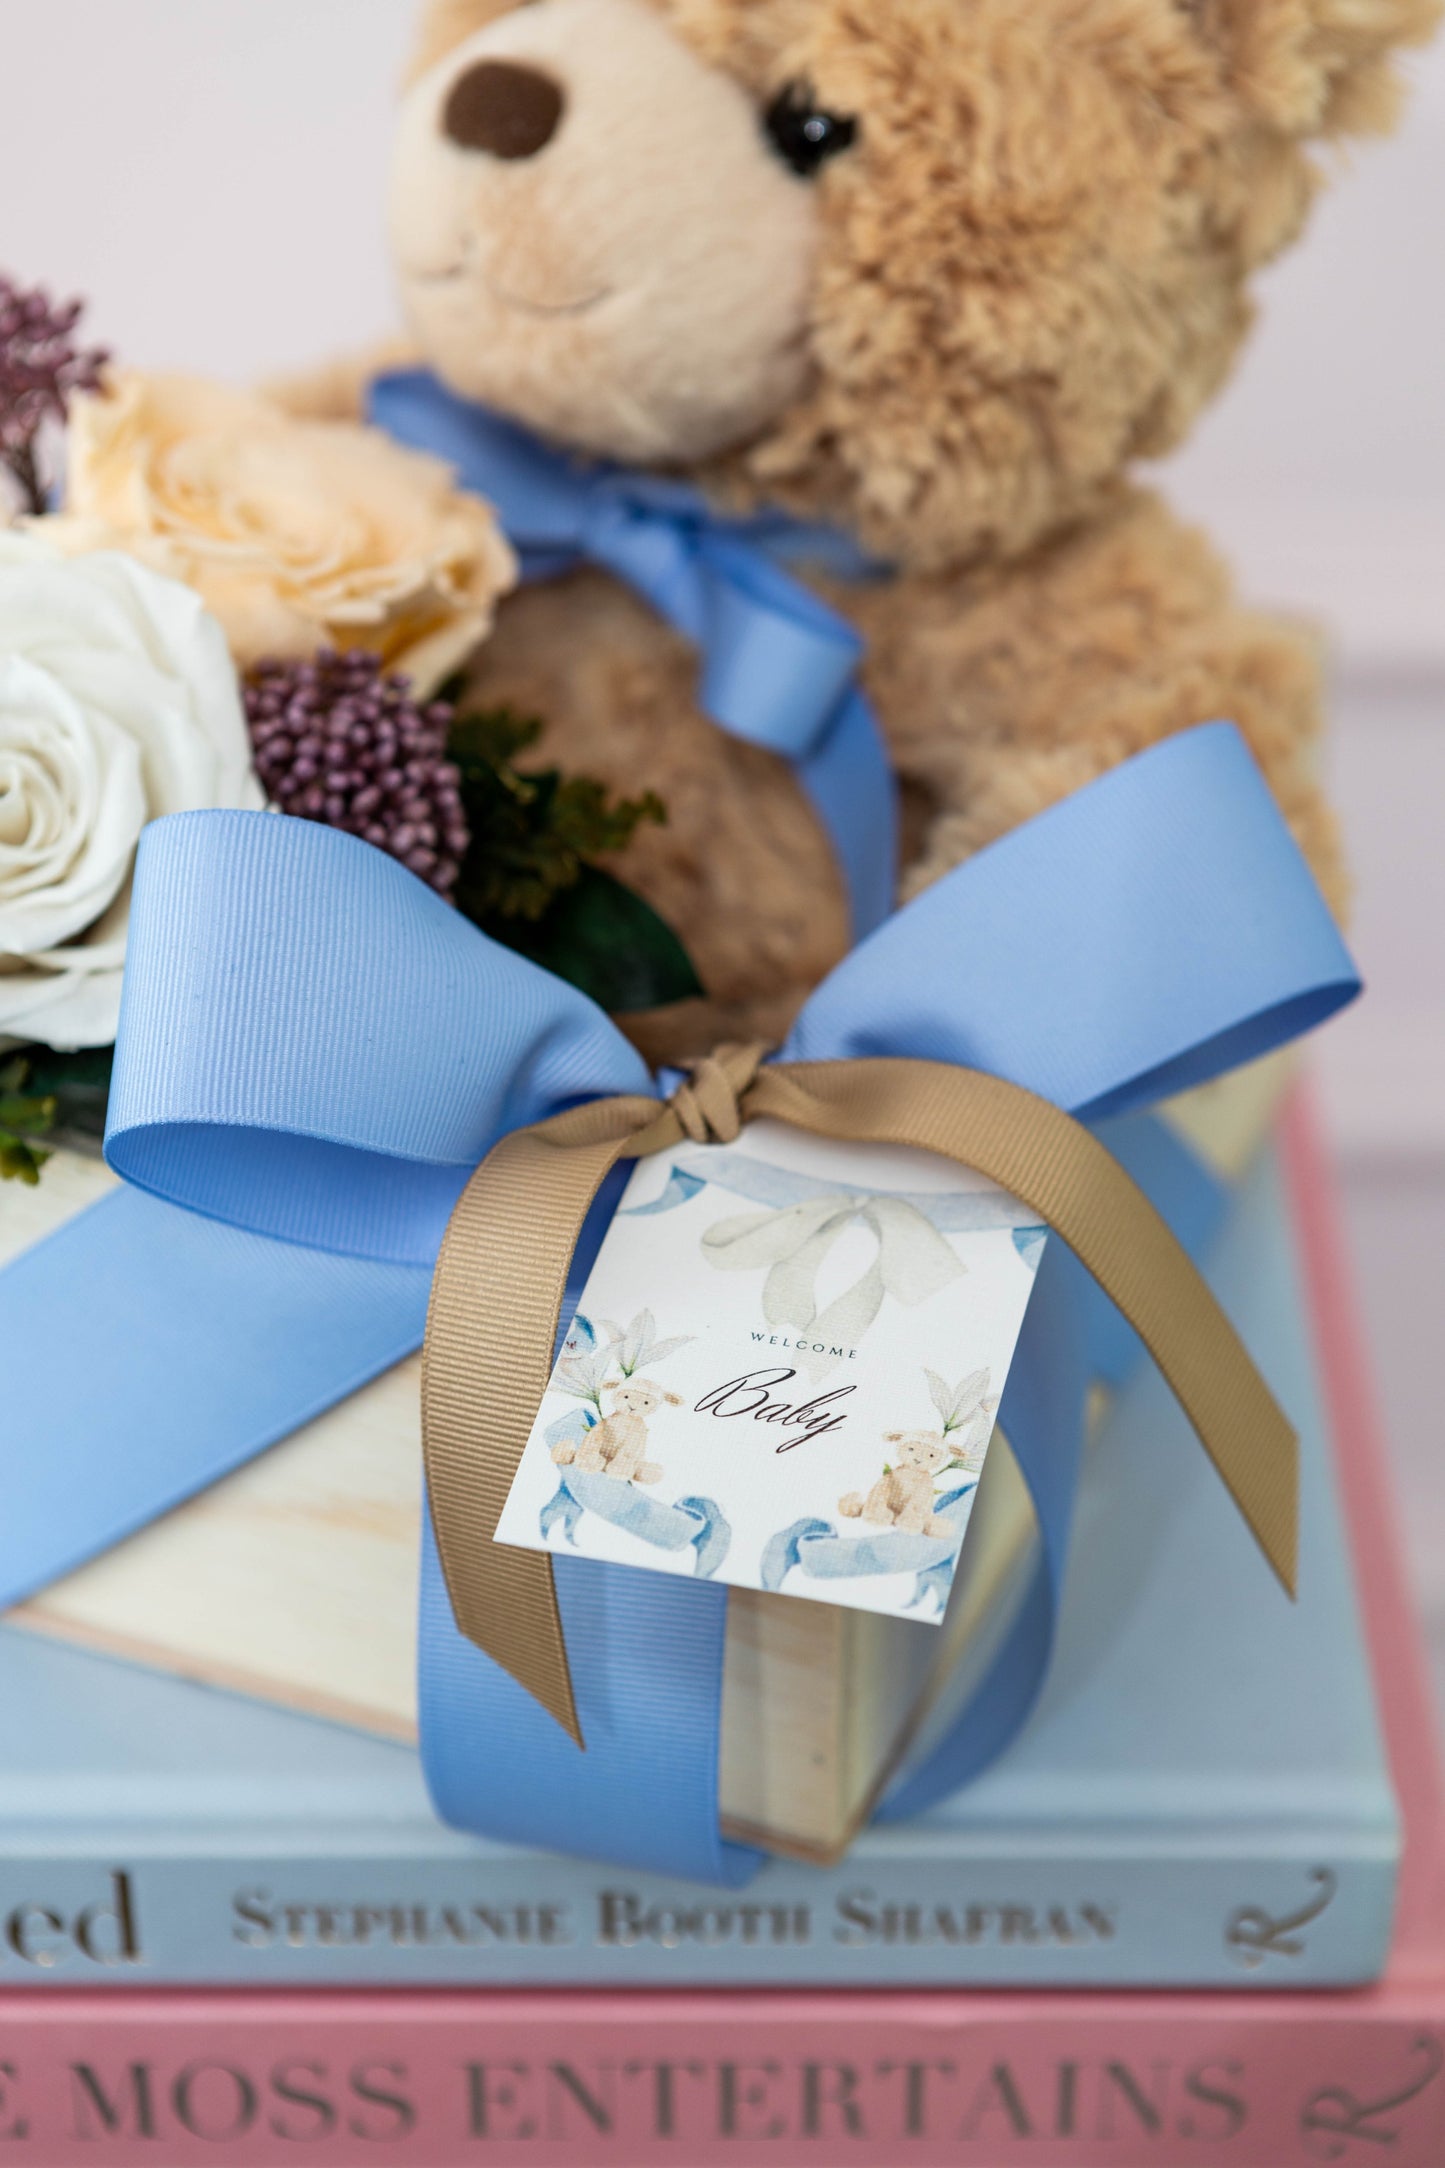 Welcome Baby Moyen Gift Box